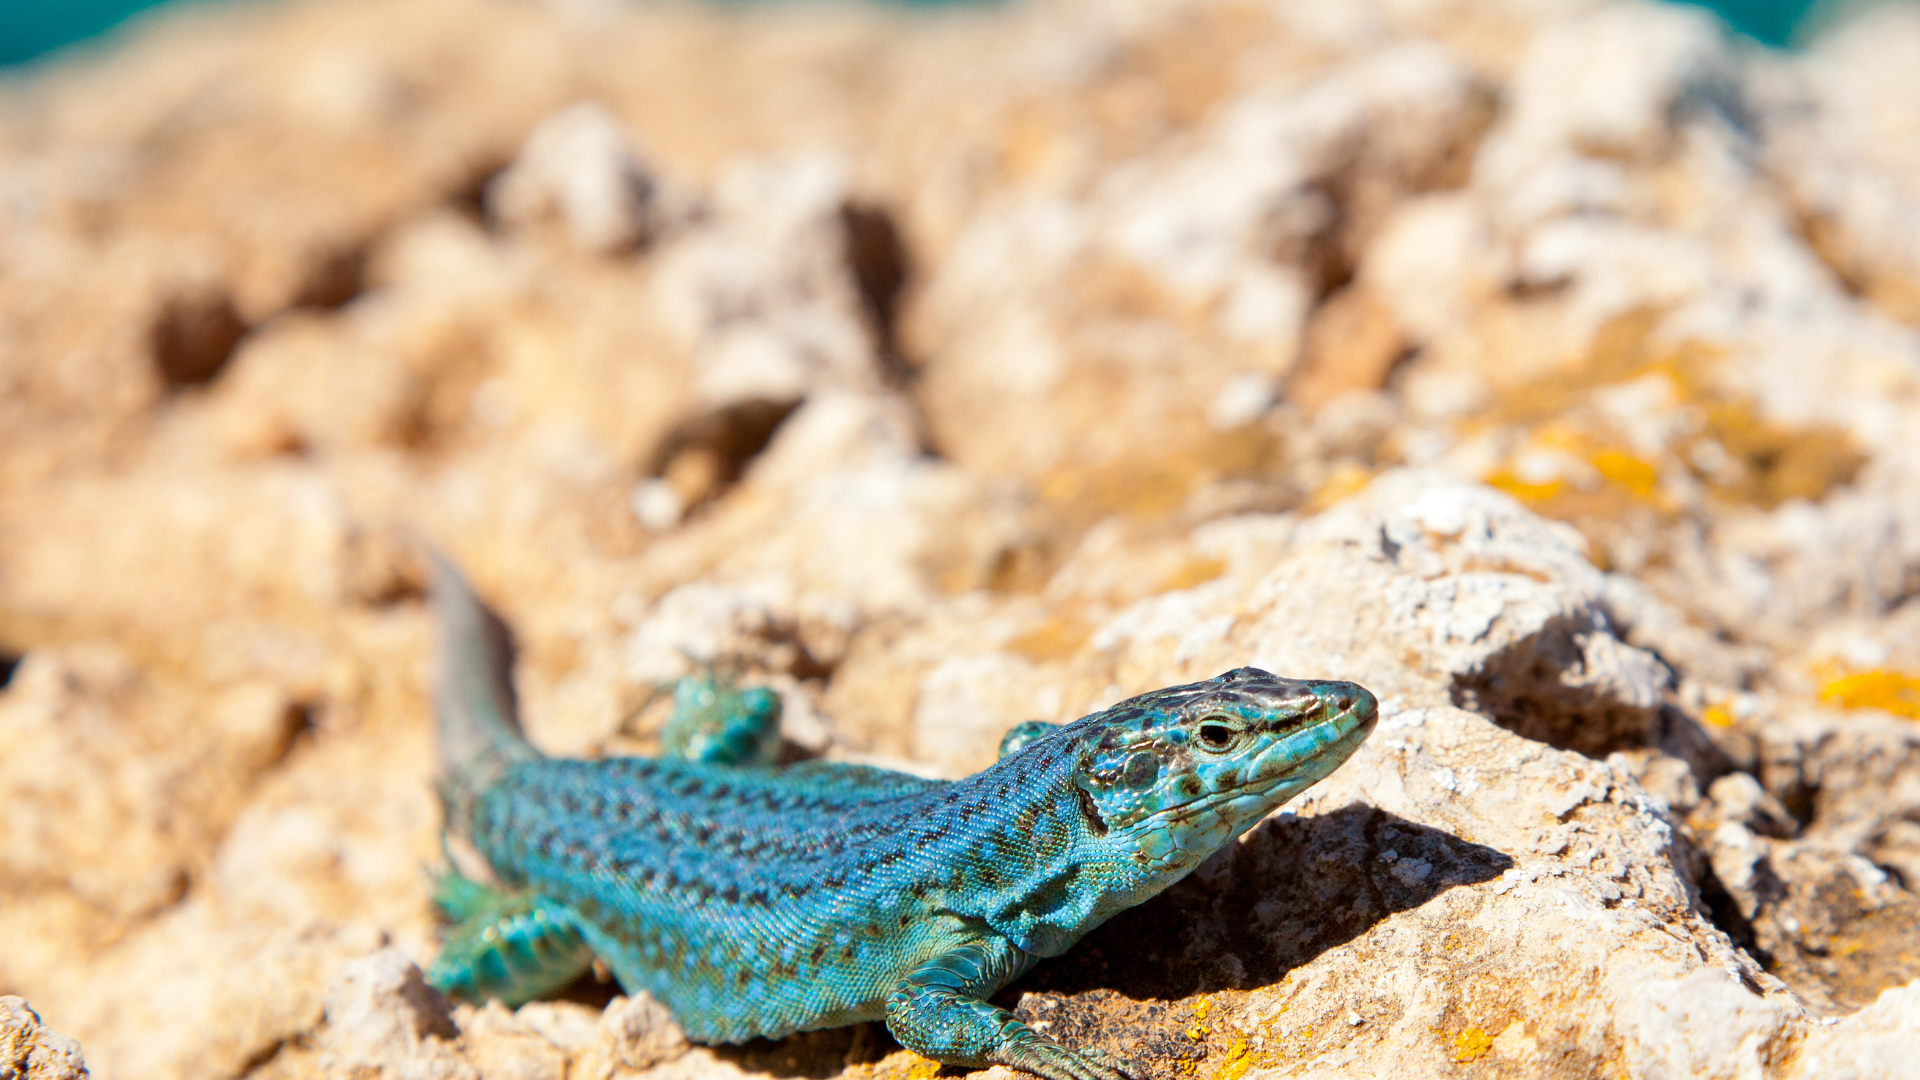 The lizards of Formentera